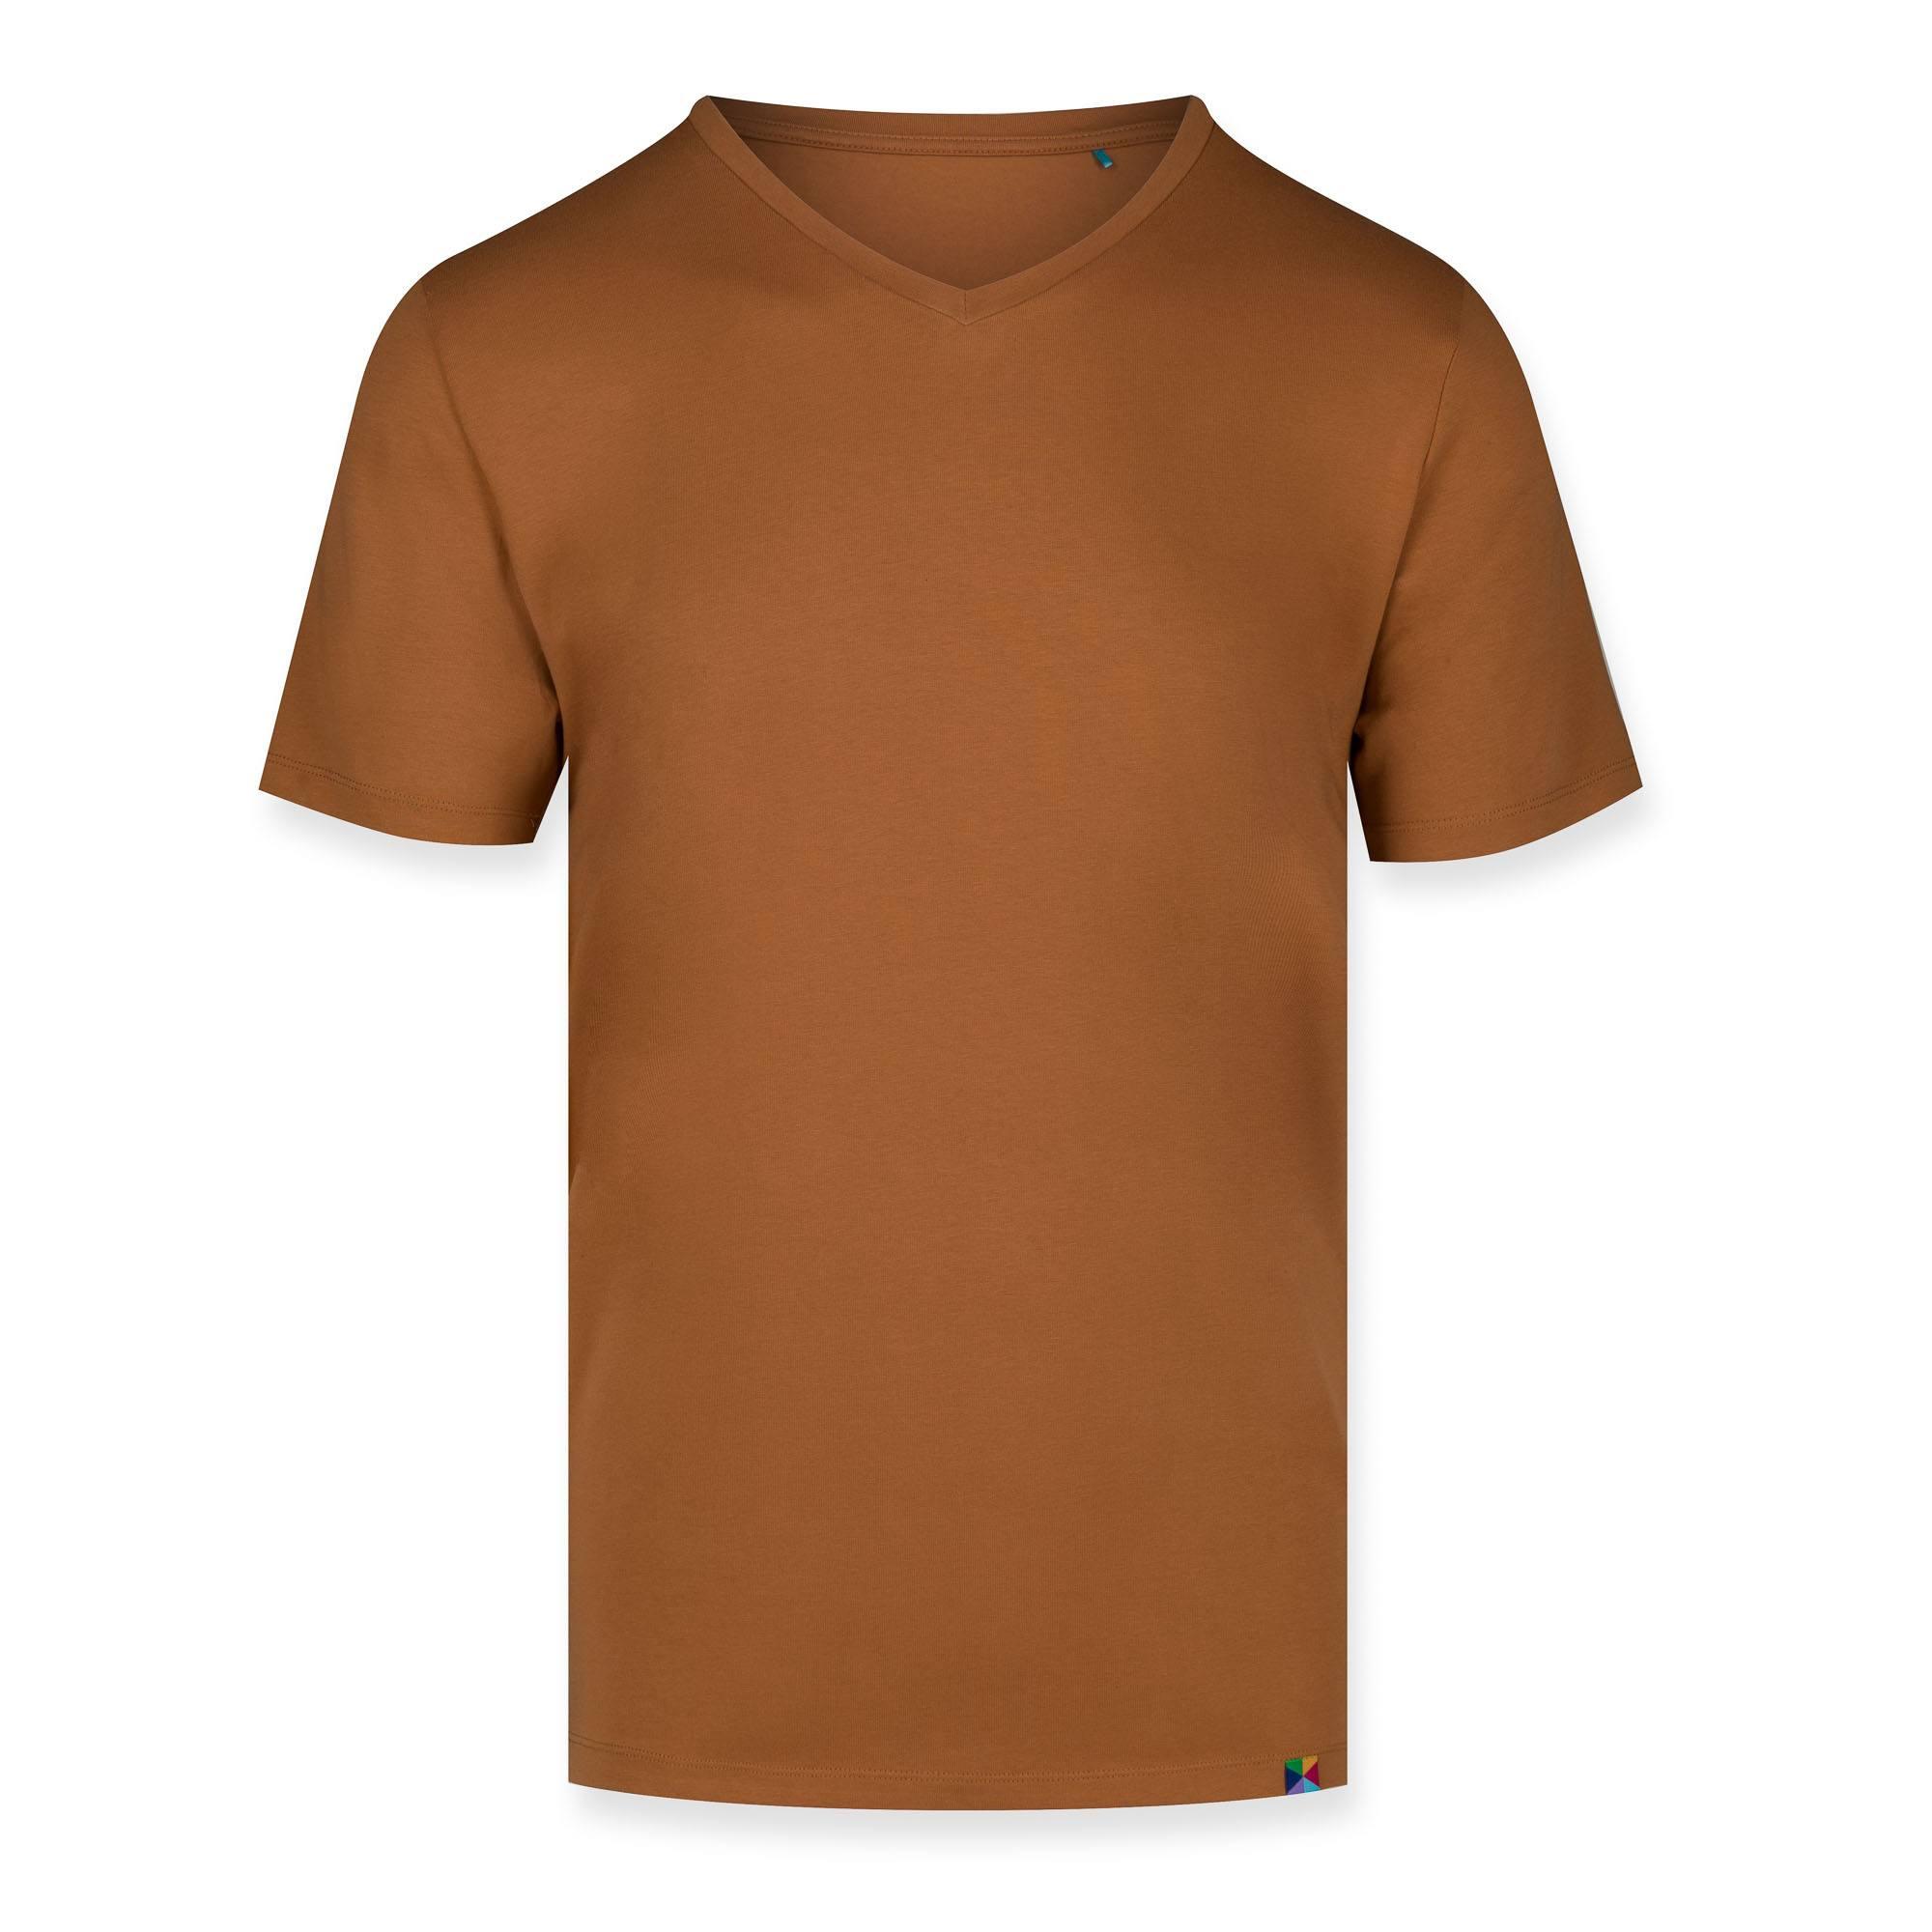 Karmelowy t-shirt w serek męski